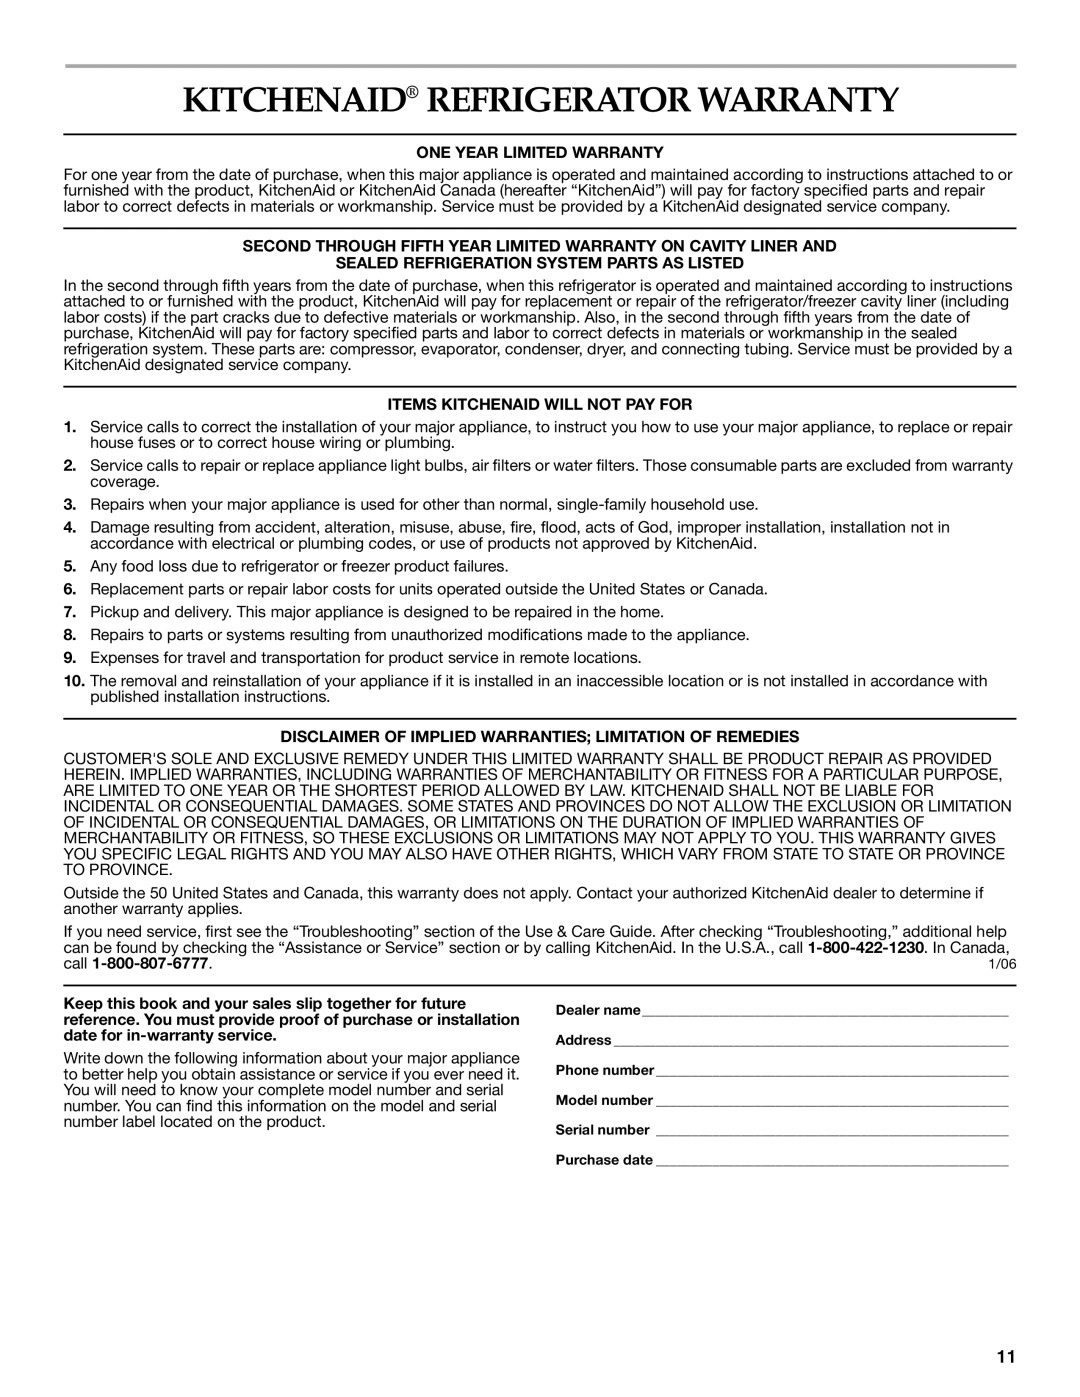 KitchenAid 2300276B manual Kitchenaid Refrigerator Warranty, ONE Year Limited Warranty, Items Kitchenaid will not PAY for 